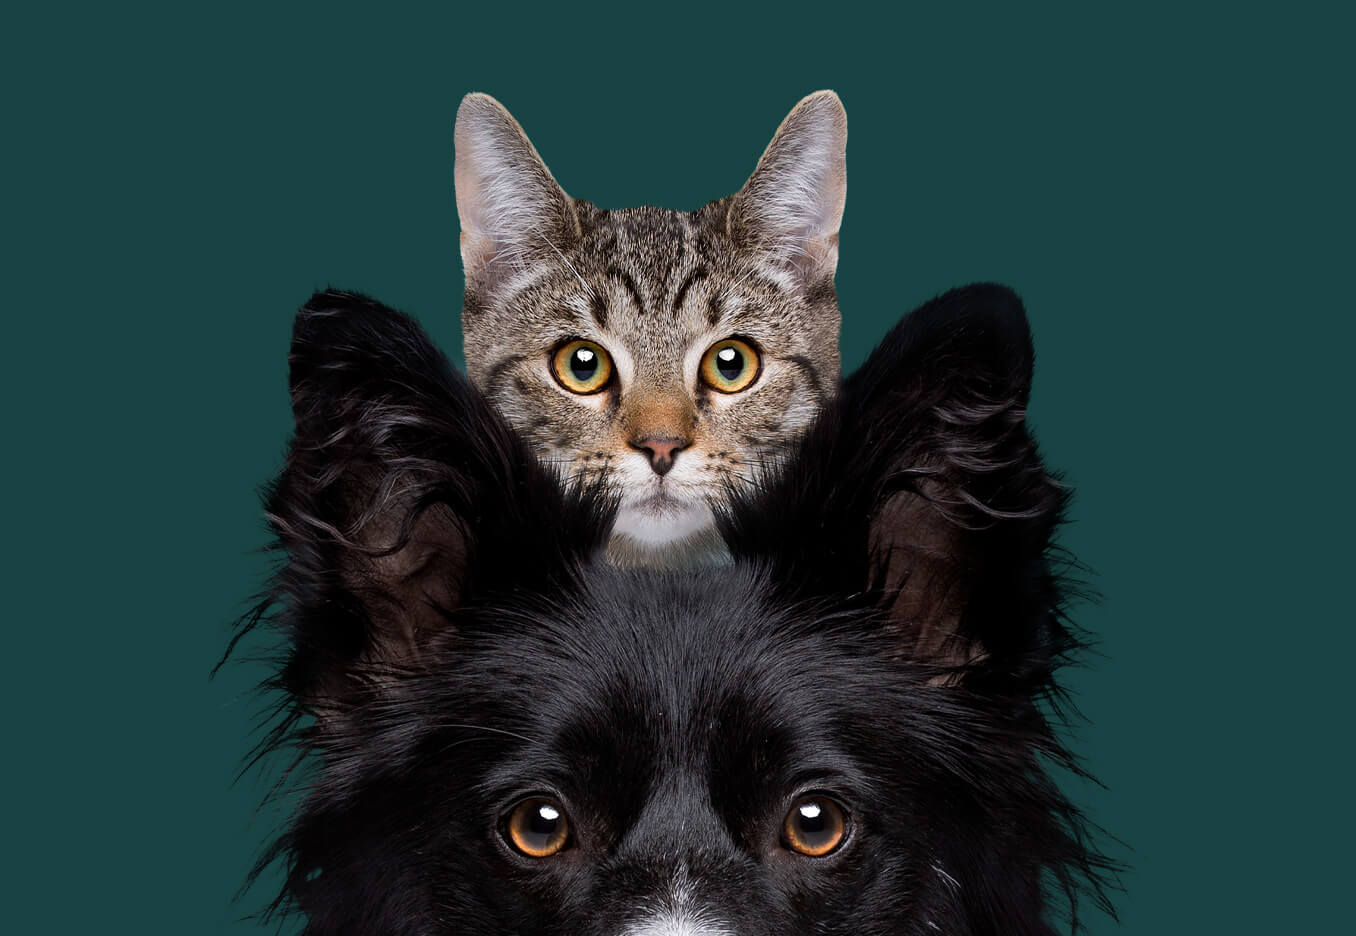 Dog and Cat Pet Portraits